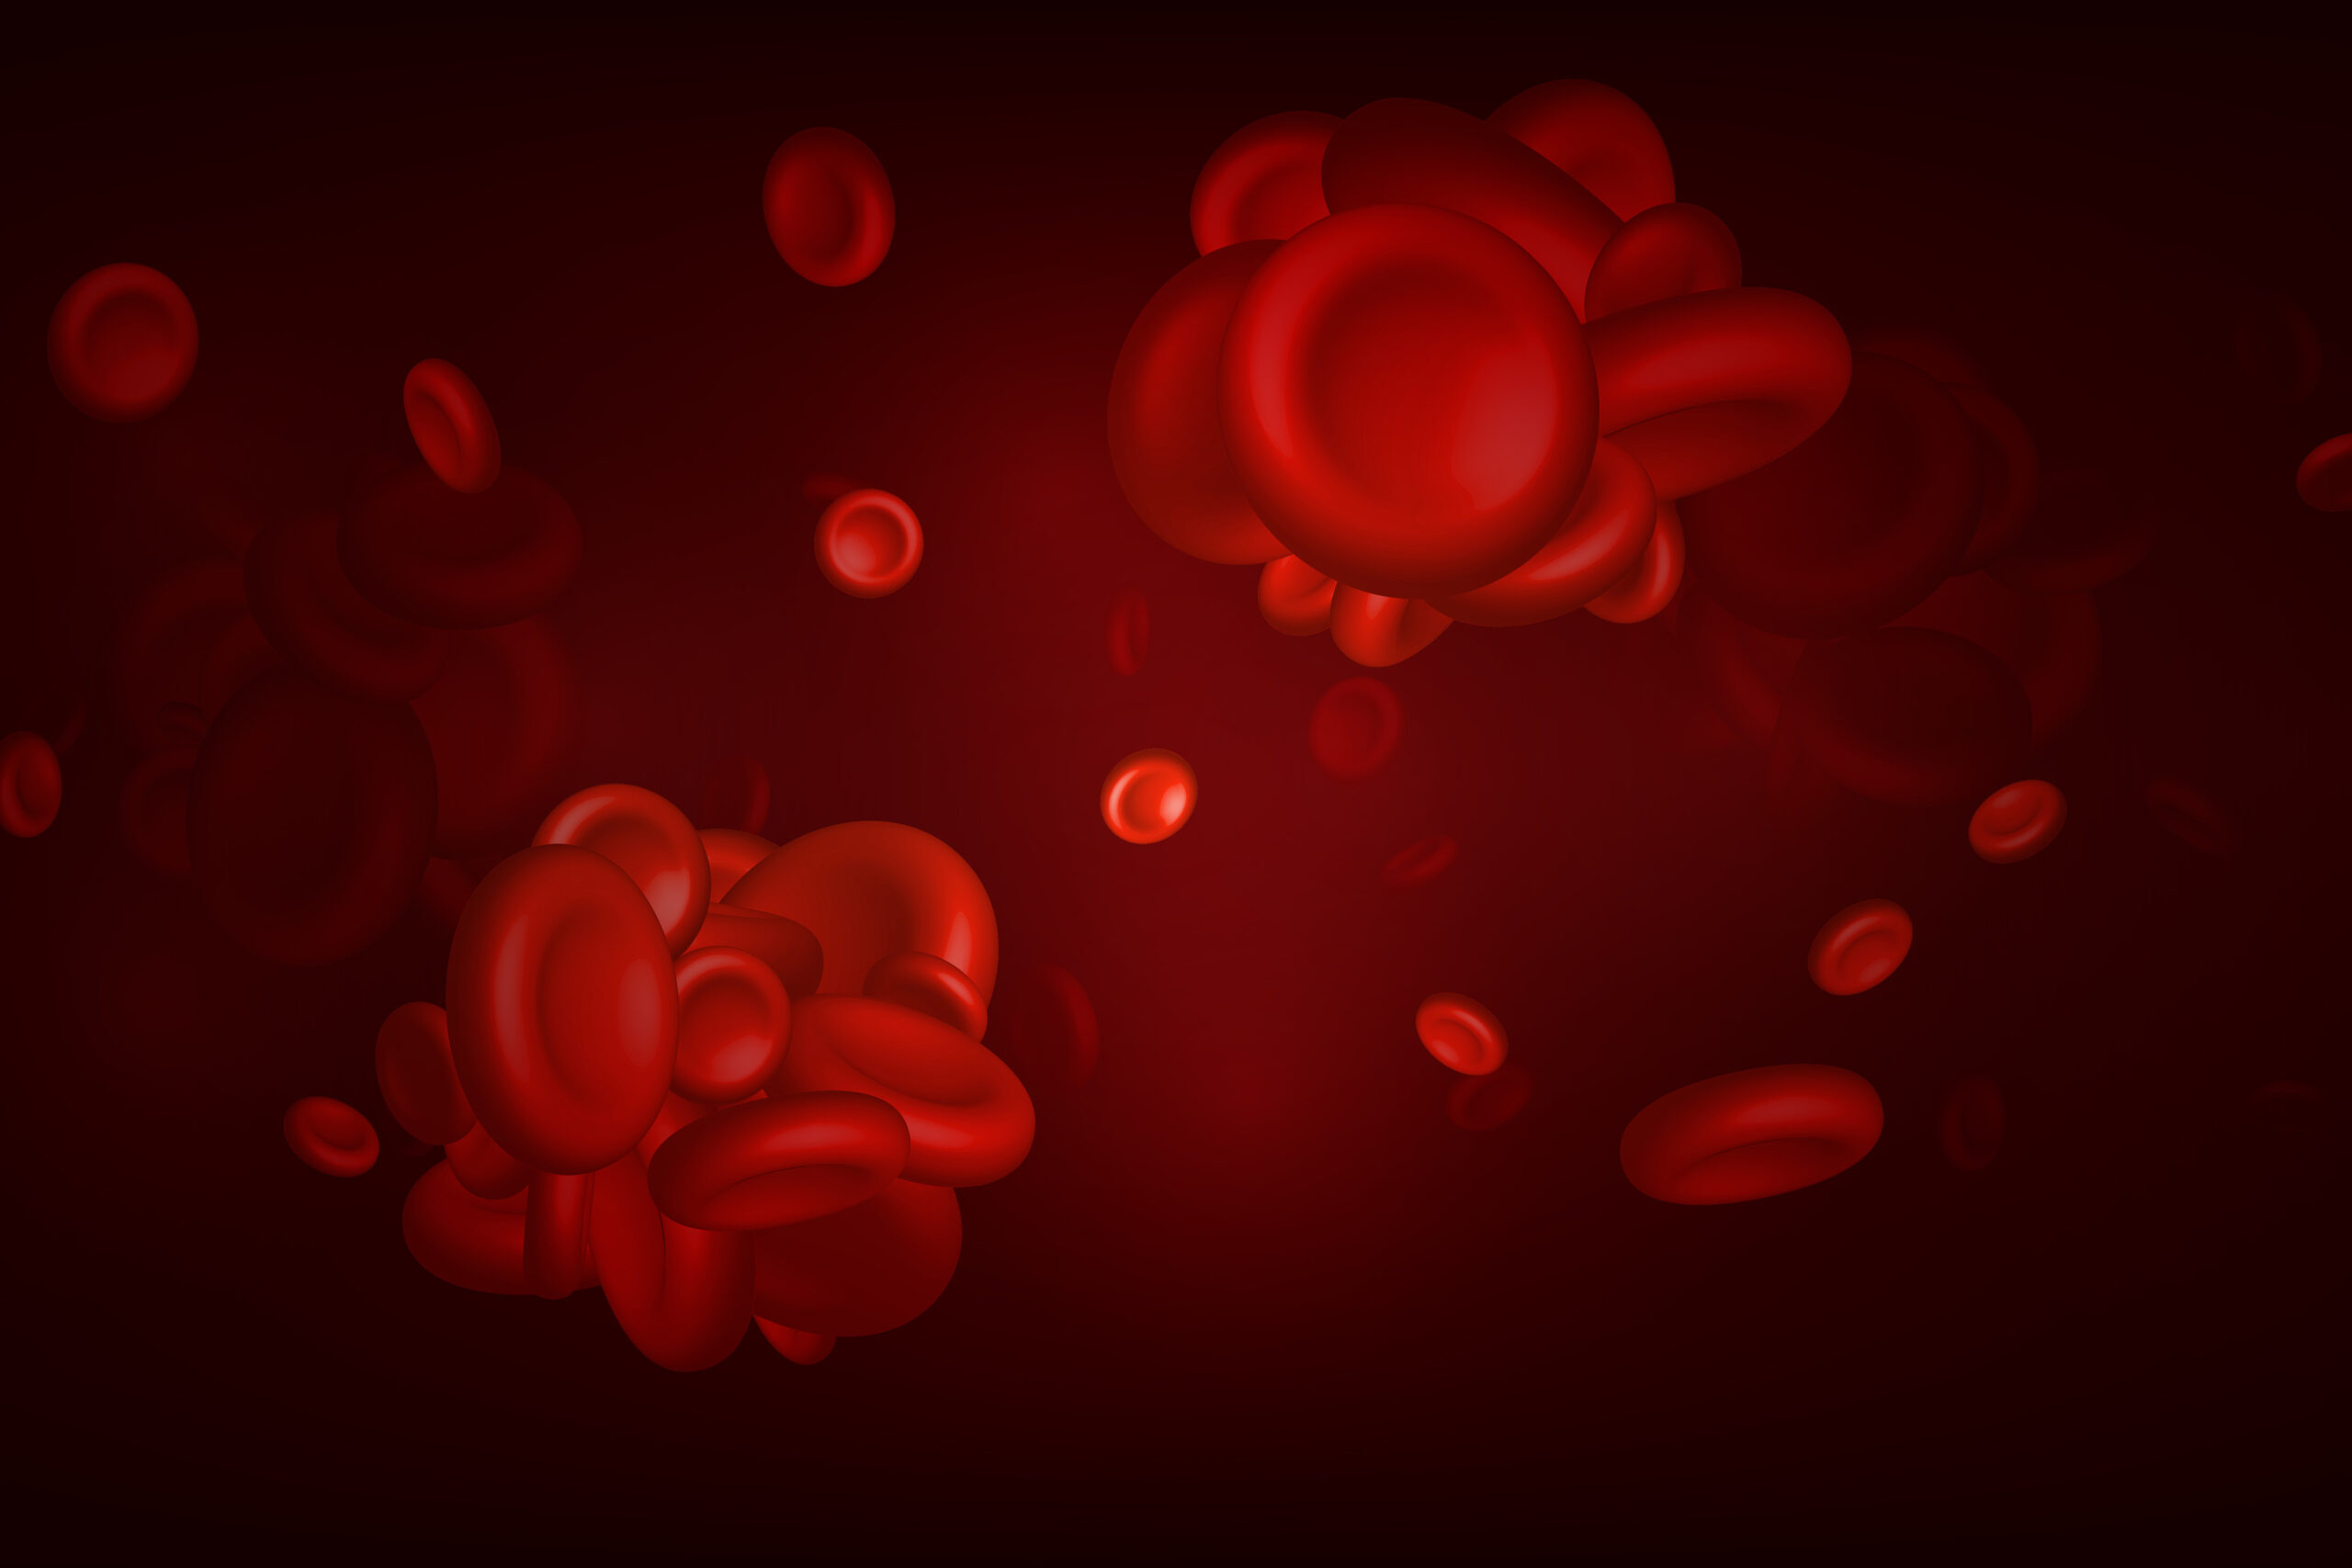 Blood clots, thrombus or embolus with coagulated erythrocytes.